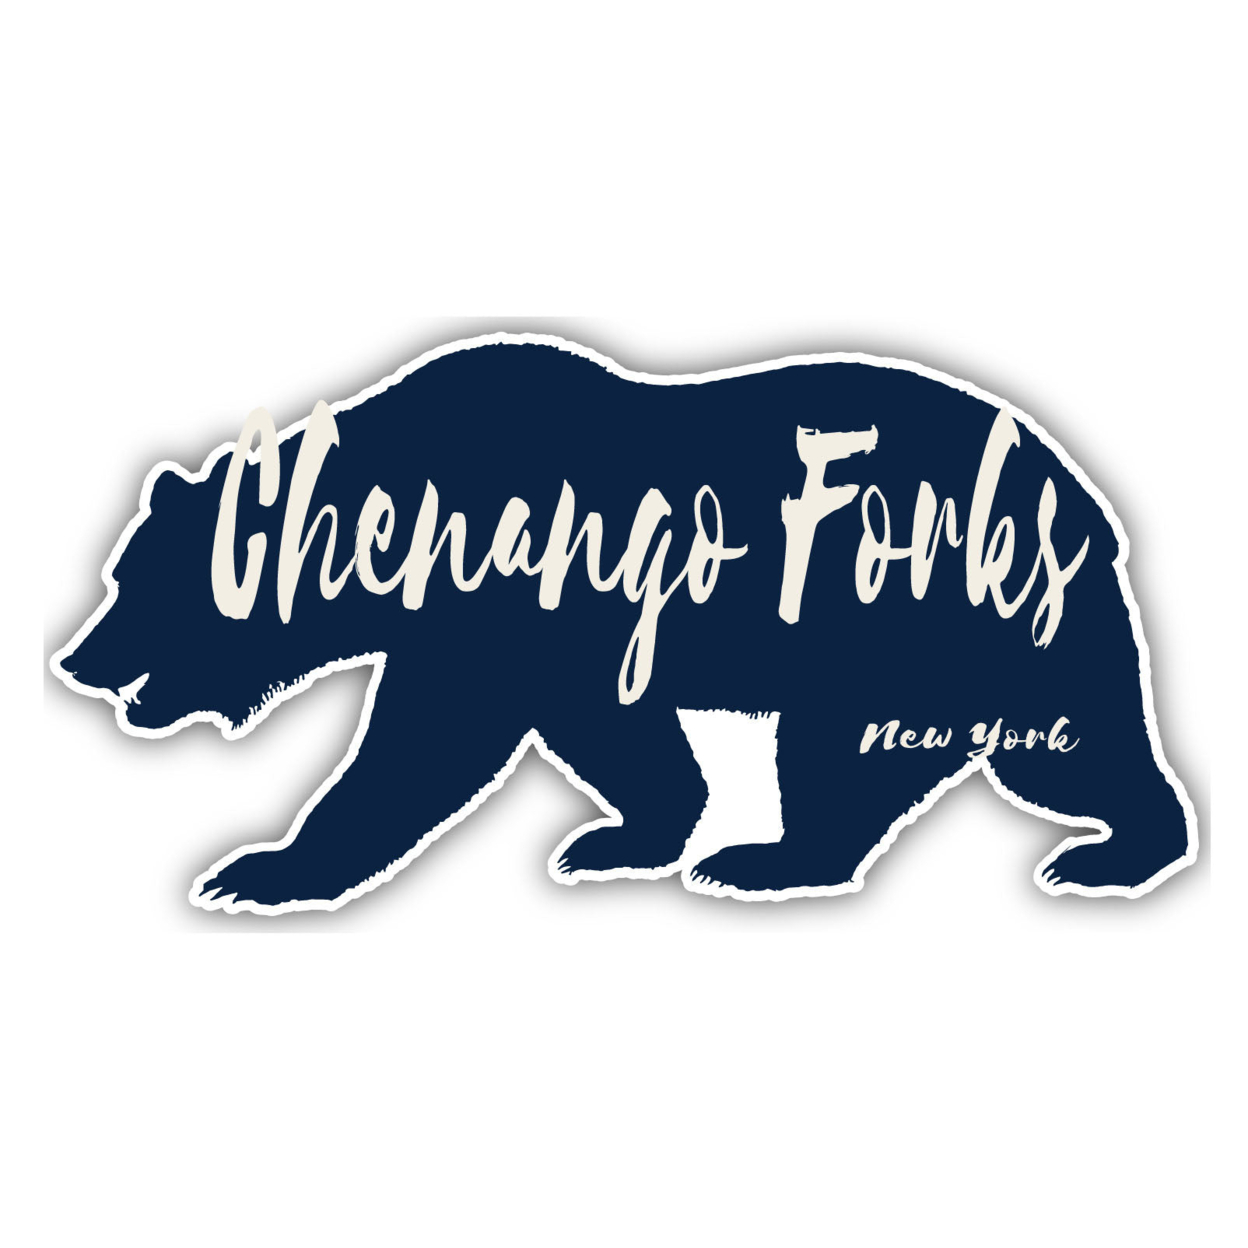 Chenango Forks New York Souvenir Decorative Stickers (Choose Theme And Size) - Single Unit, 2-Inch, Bear